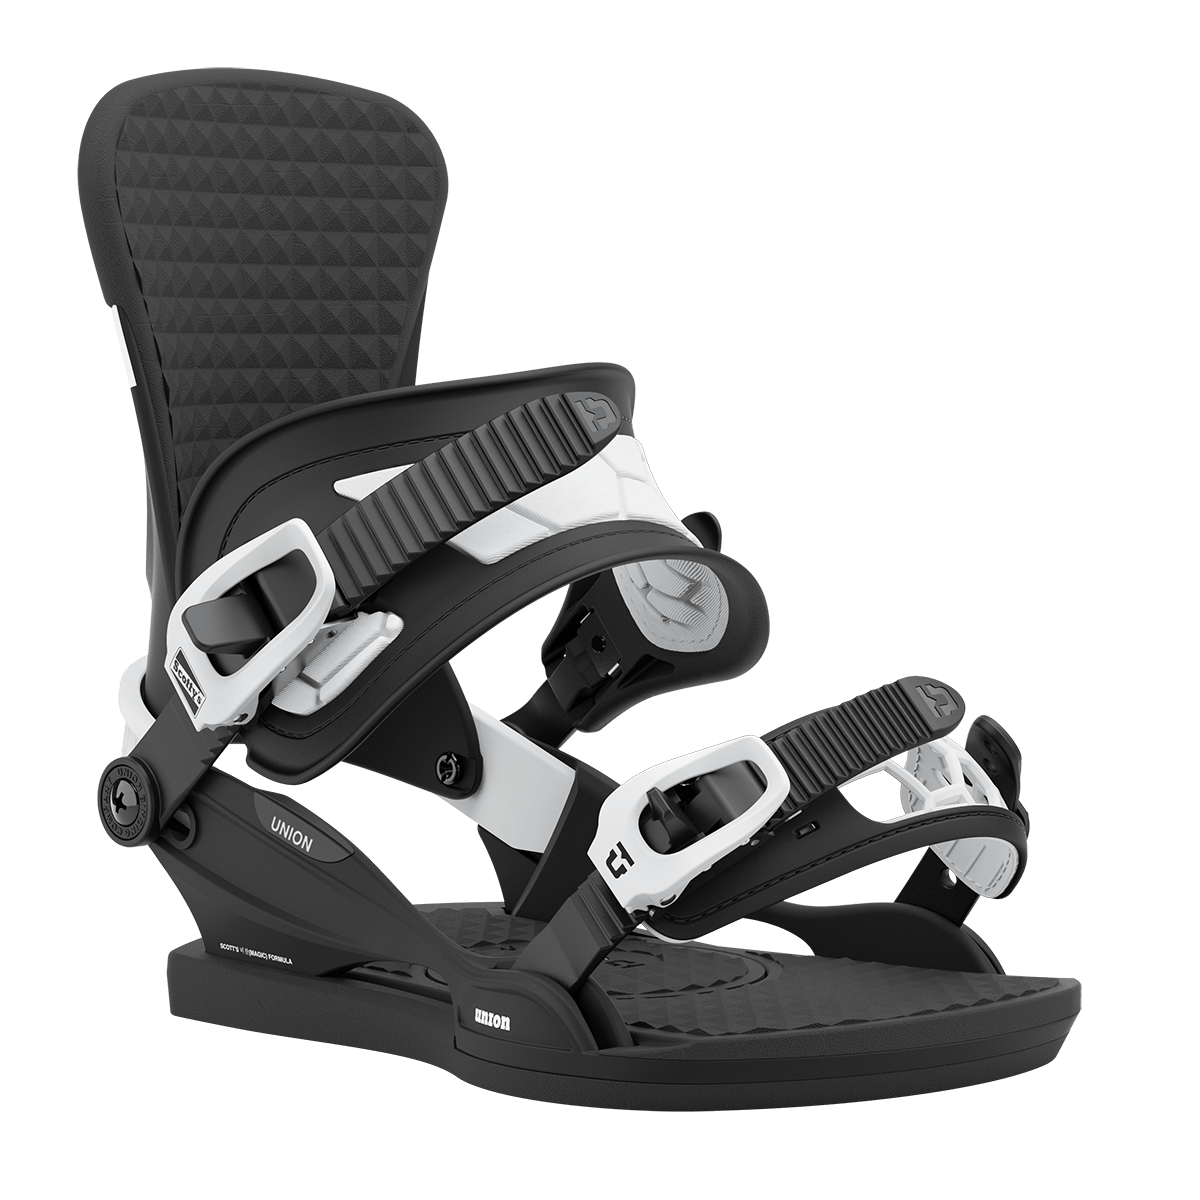 Union Contact Pro Snowboard Bindings · 2021 · Scott Stevens Limited Edition